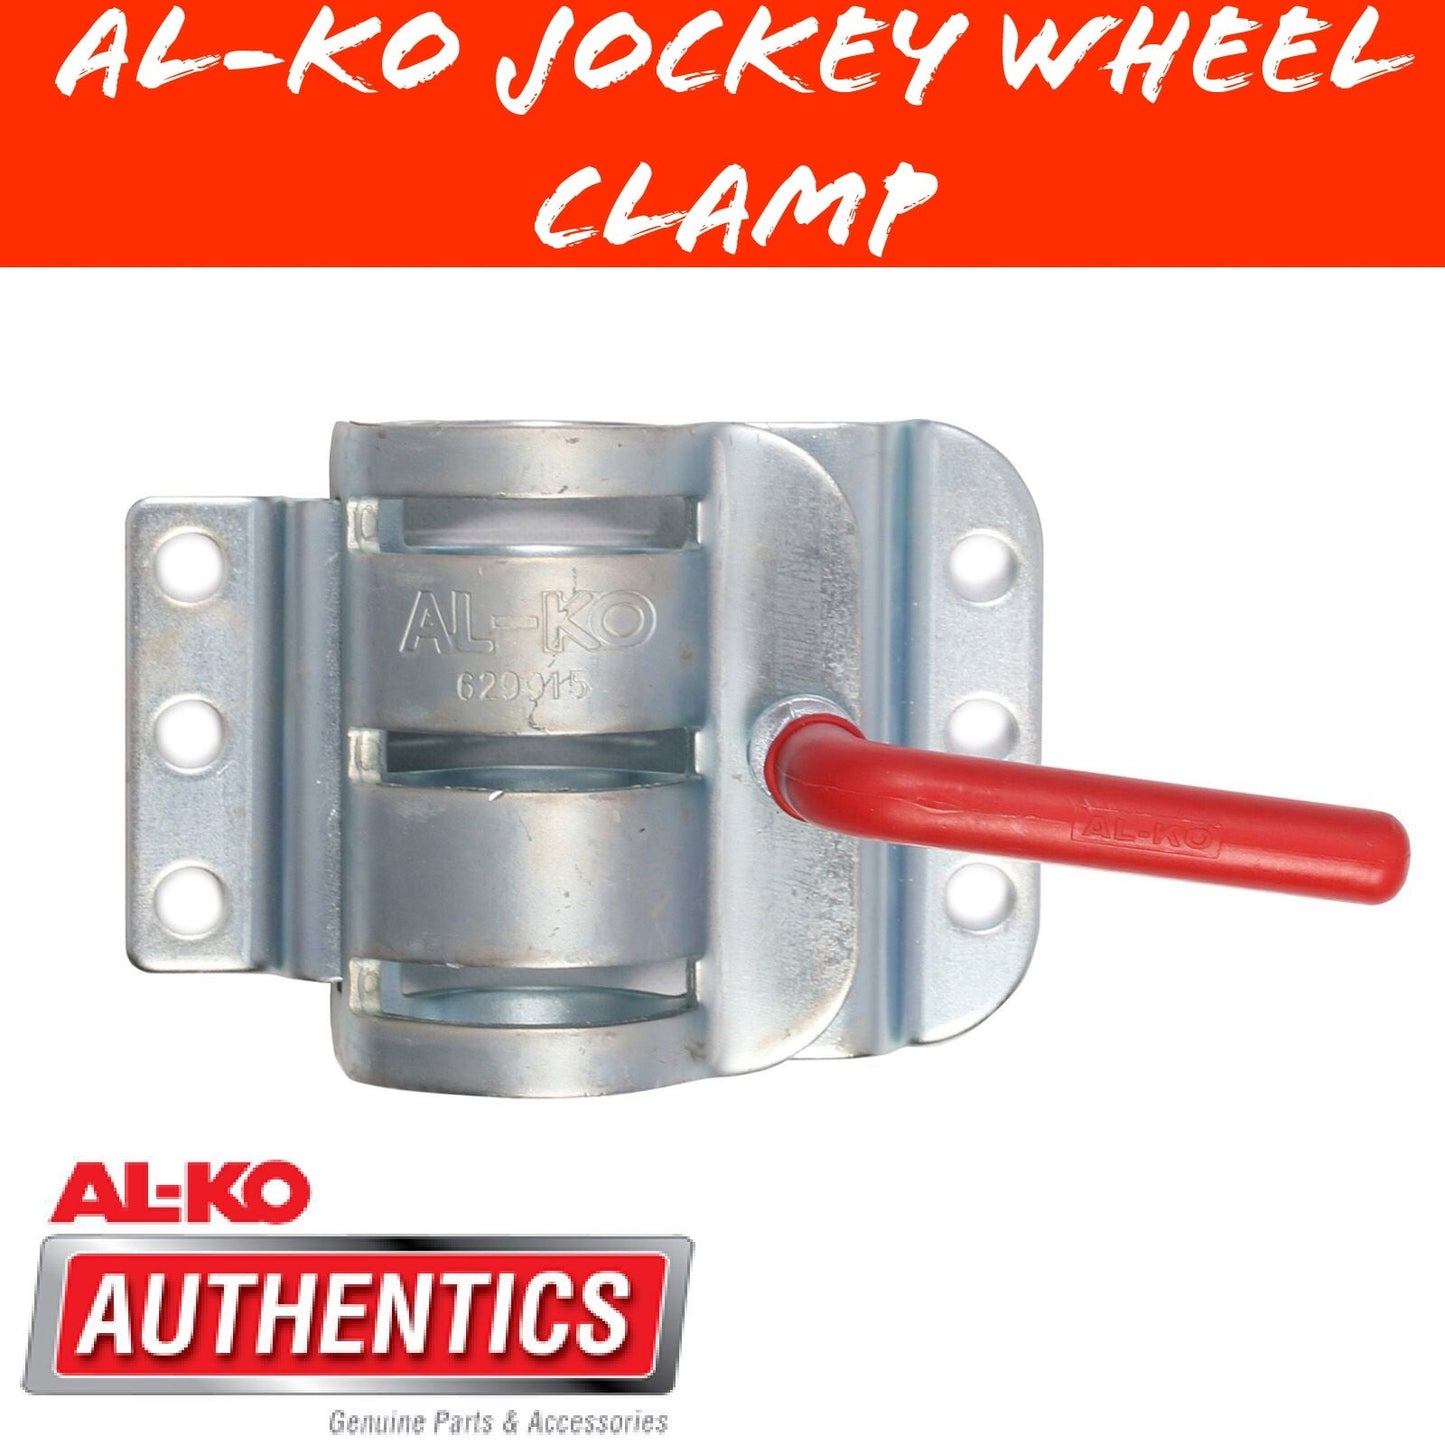 AL-KO PREMIUM Extra Wide Jockey Wheel Clamp